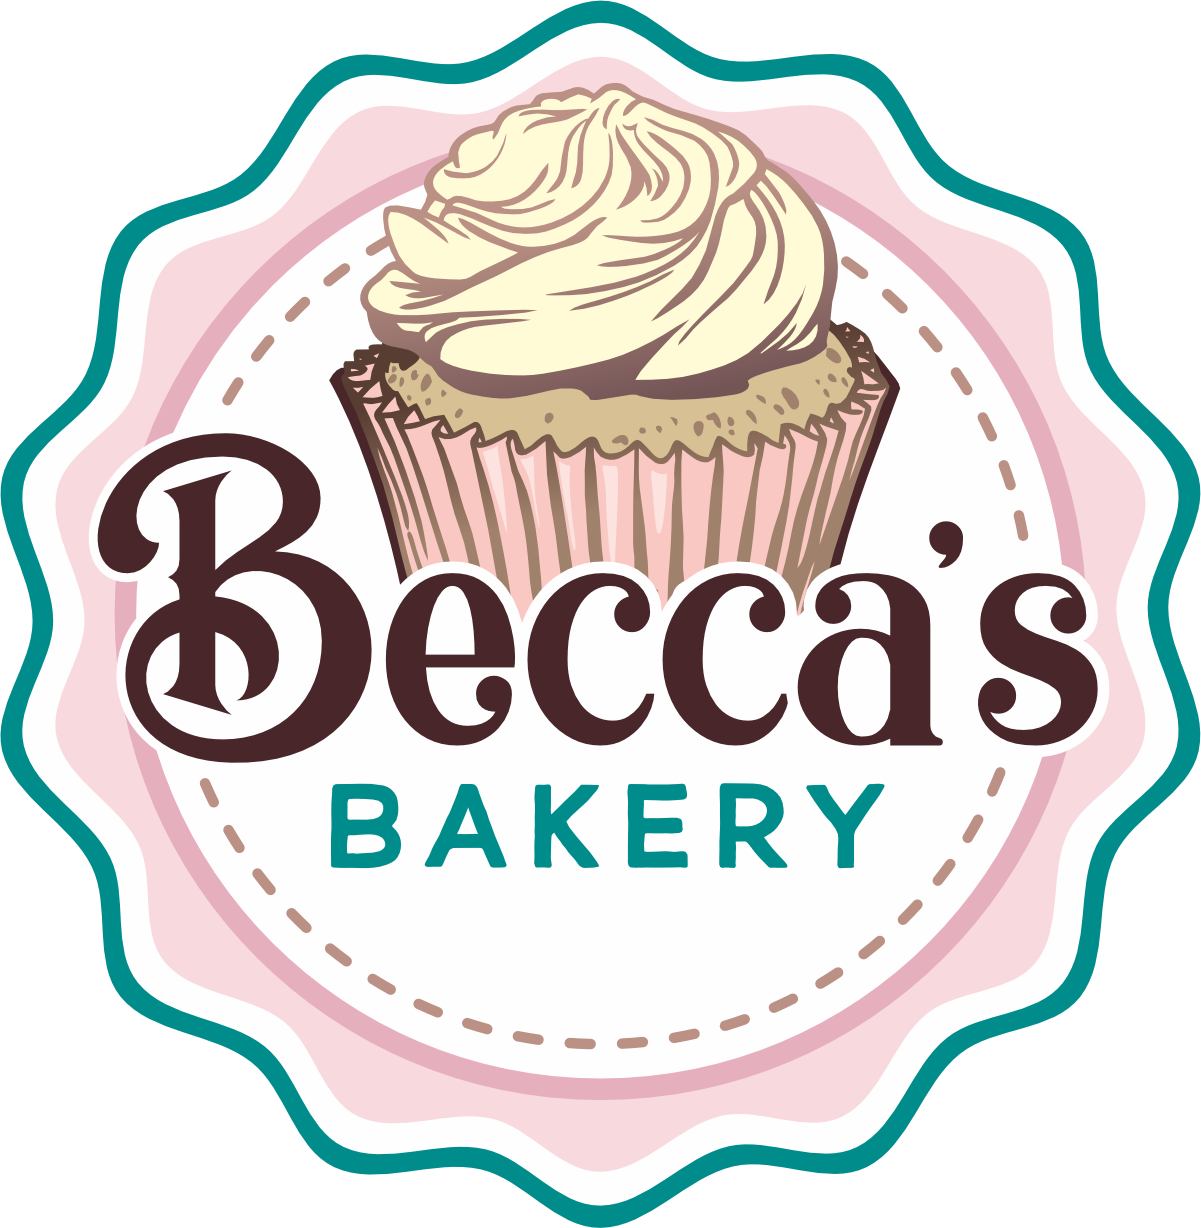 Becca's Bakery